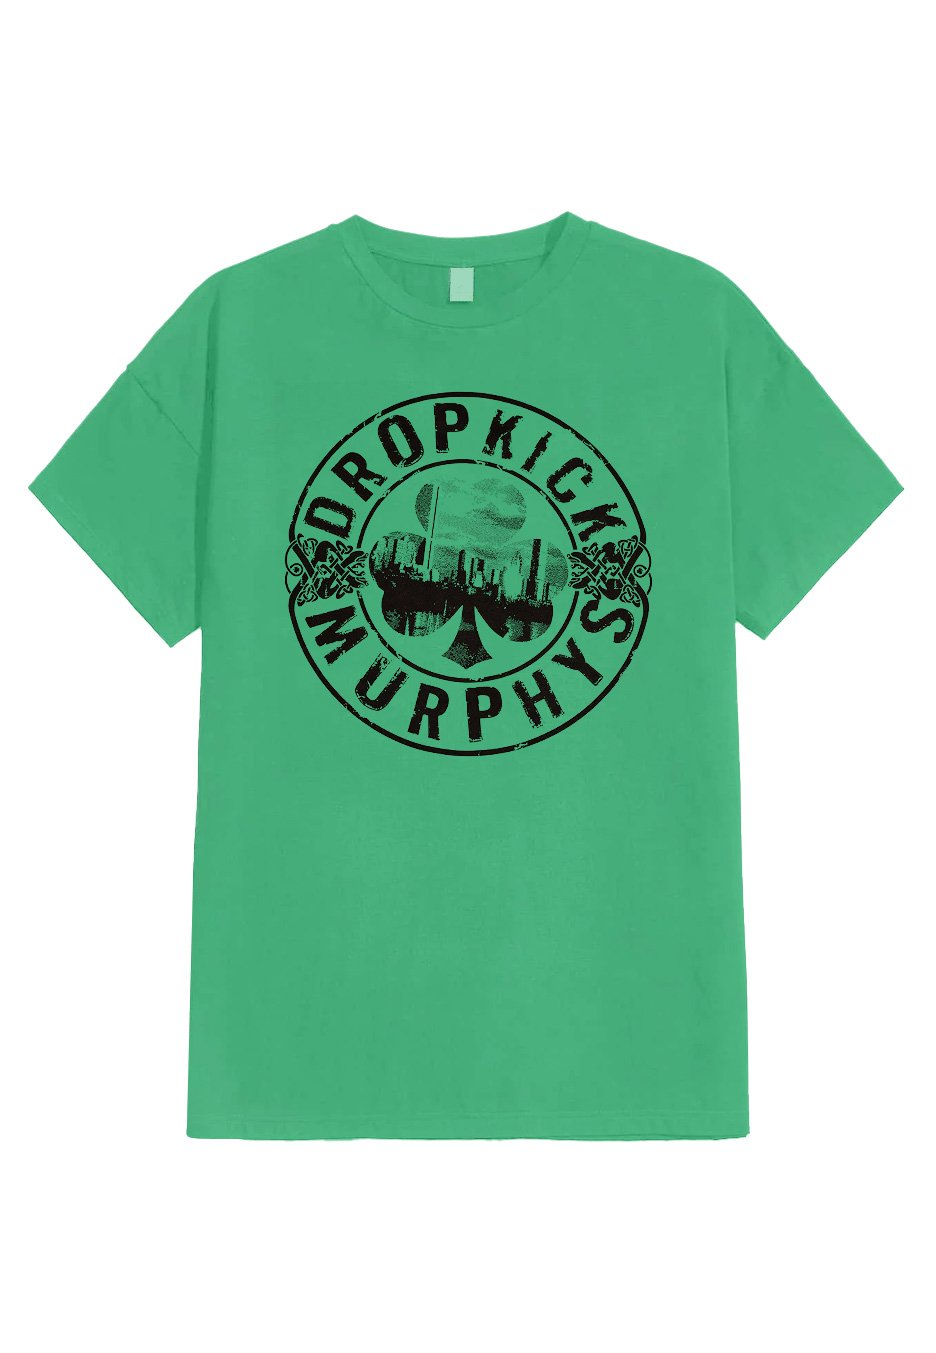 Dropkick Murphys - Boot Kelly Green - T-Shirt